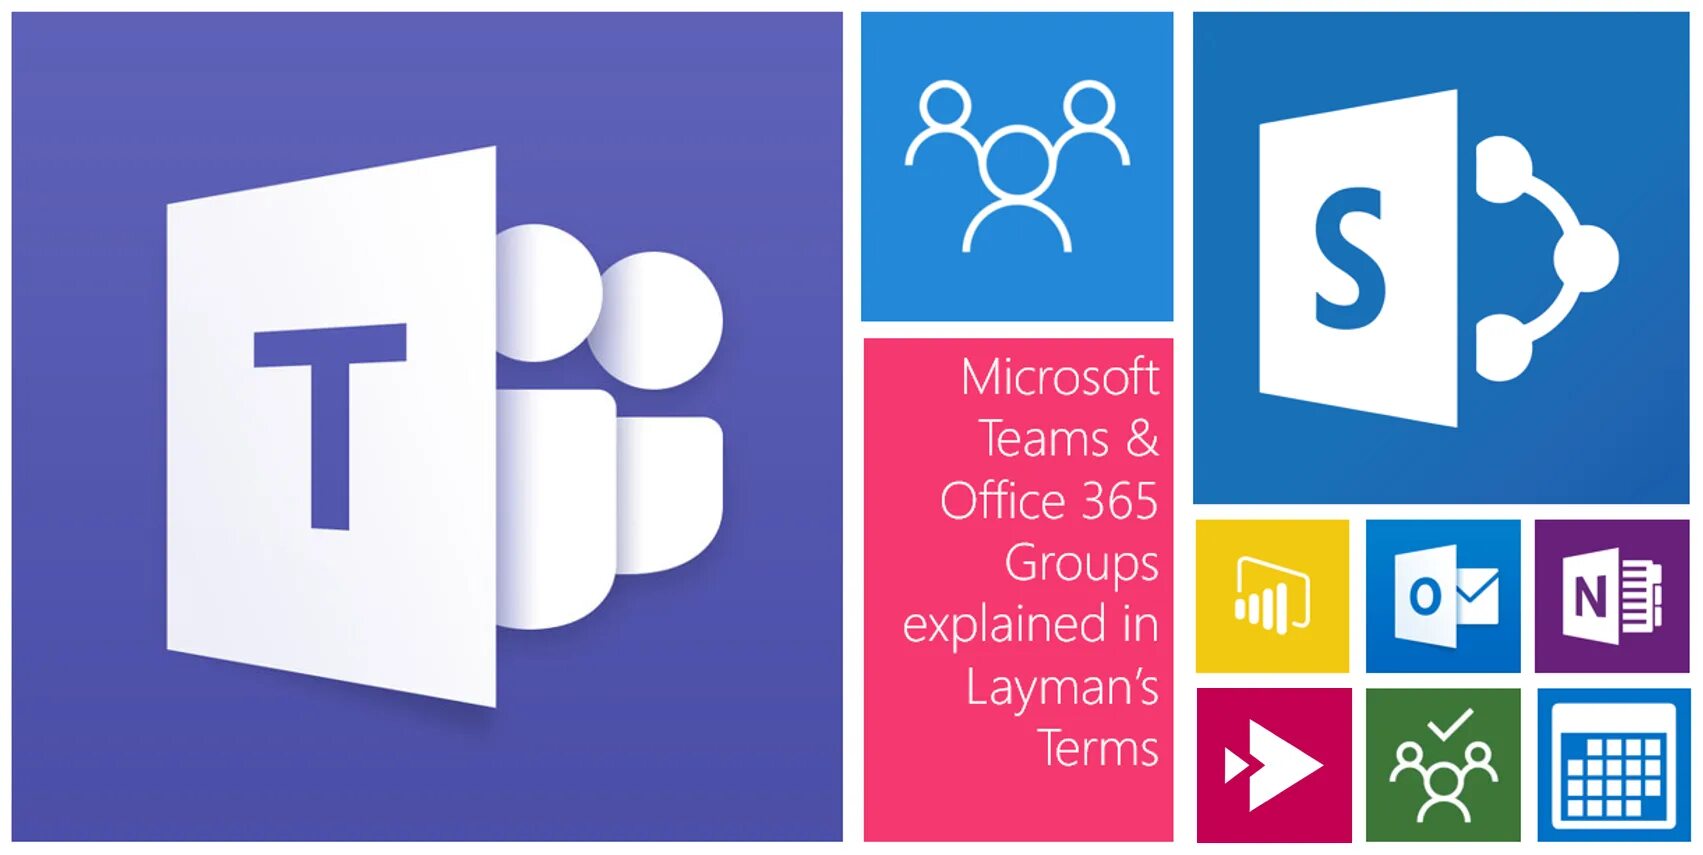 Www teams com. Майкрософт Teams. Значок MS Teams. Microsoft Office Teams. Microsoft Office 365 Teams.